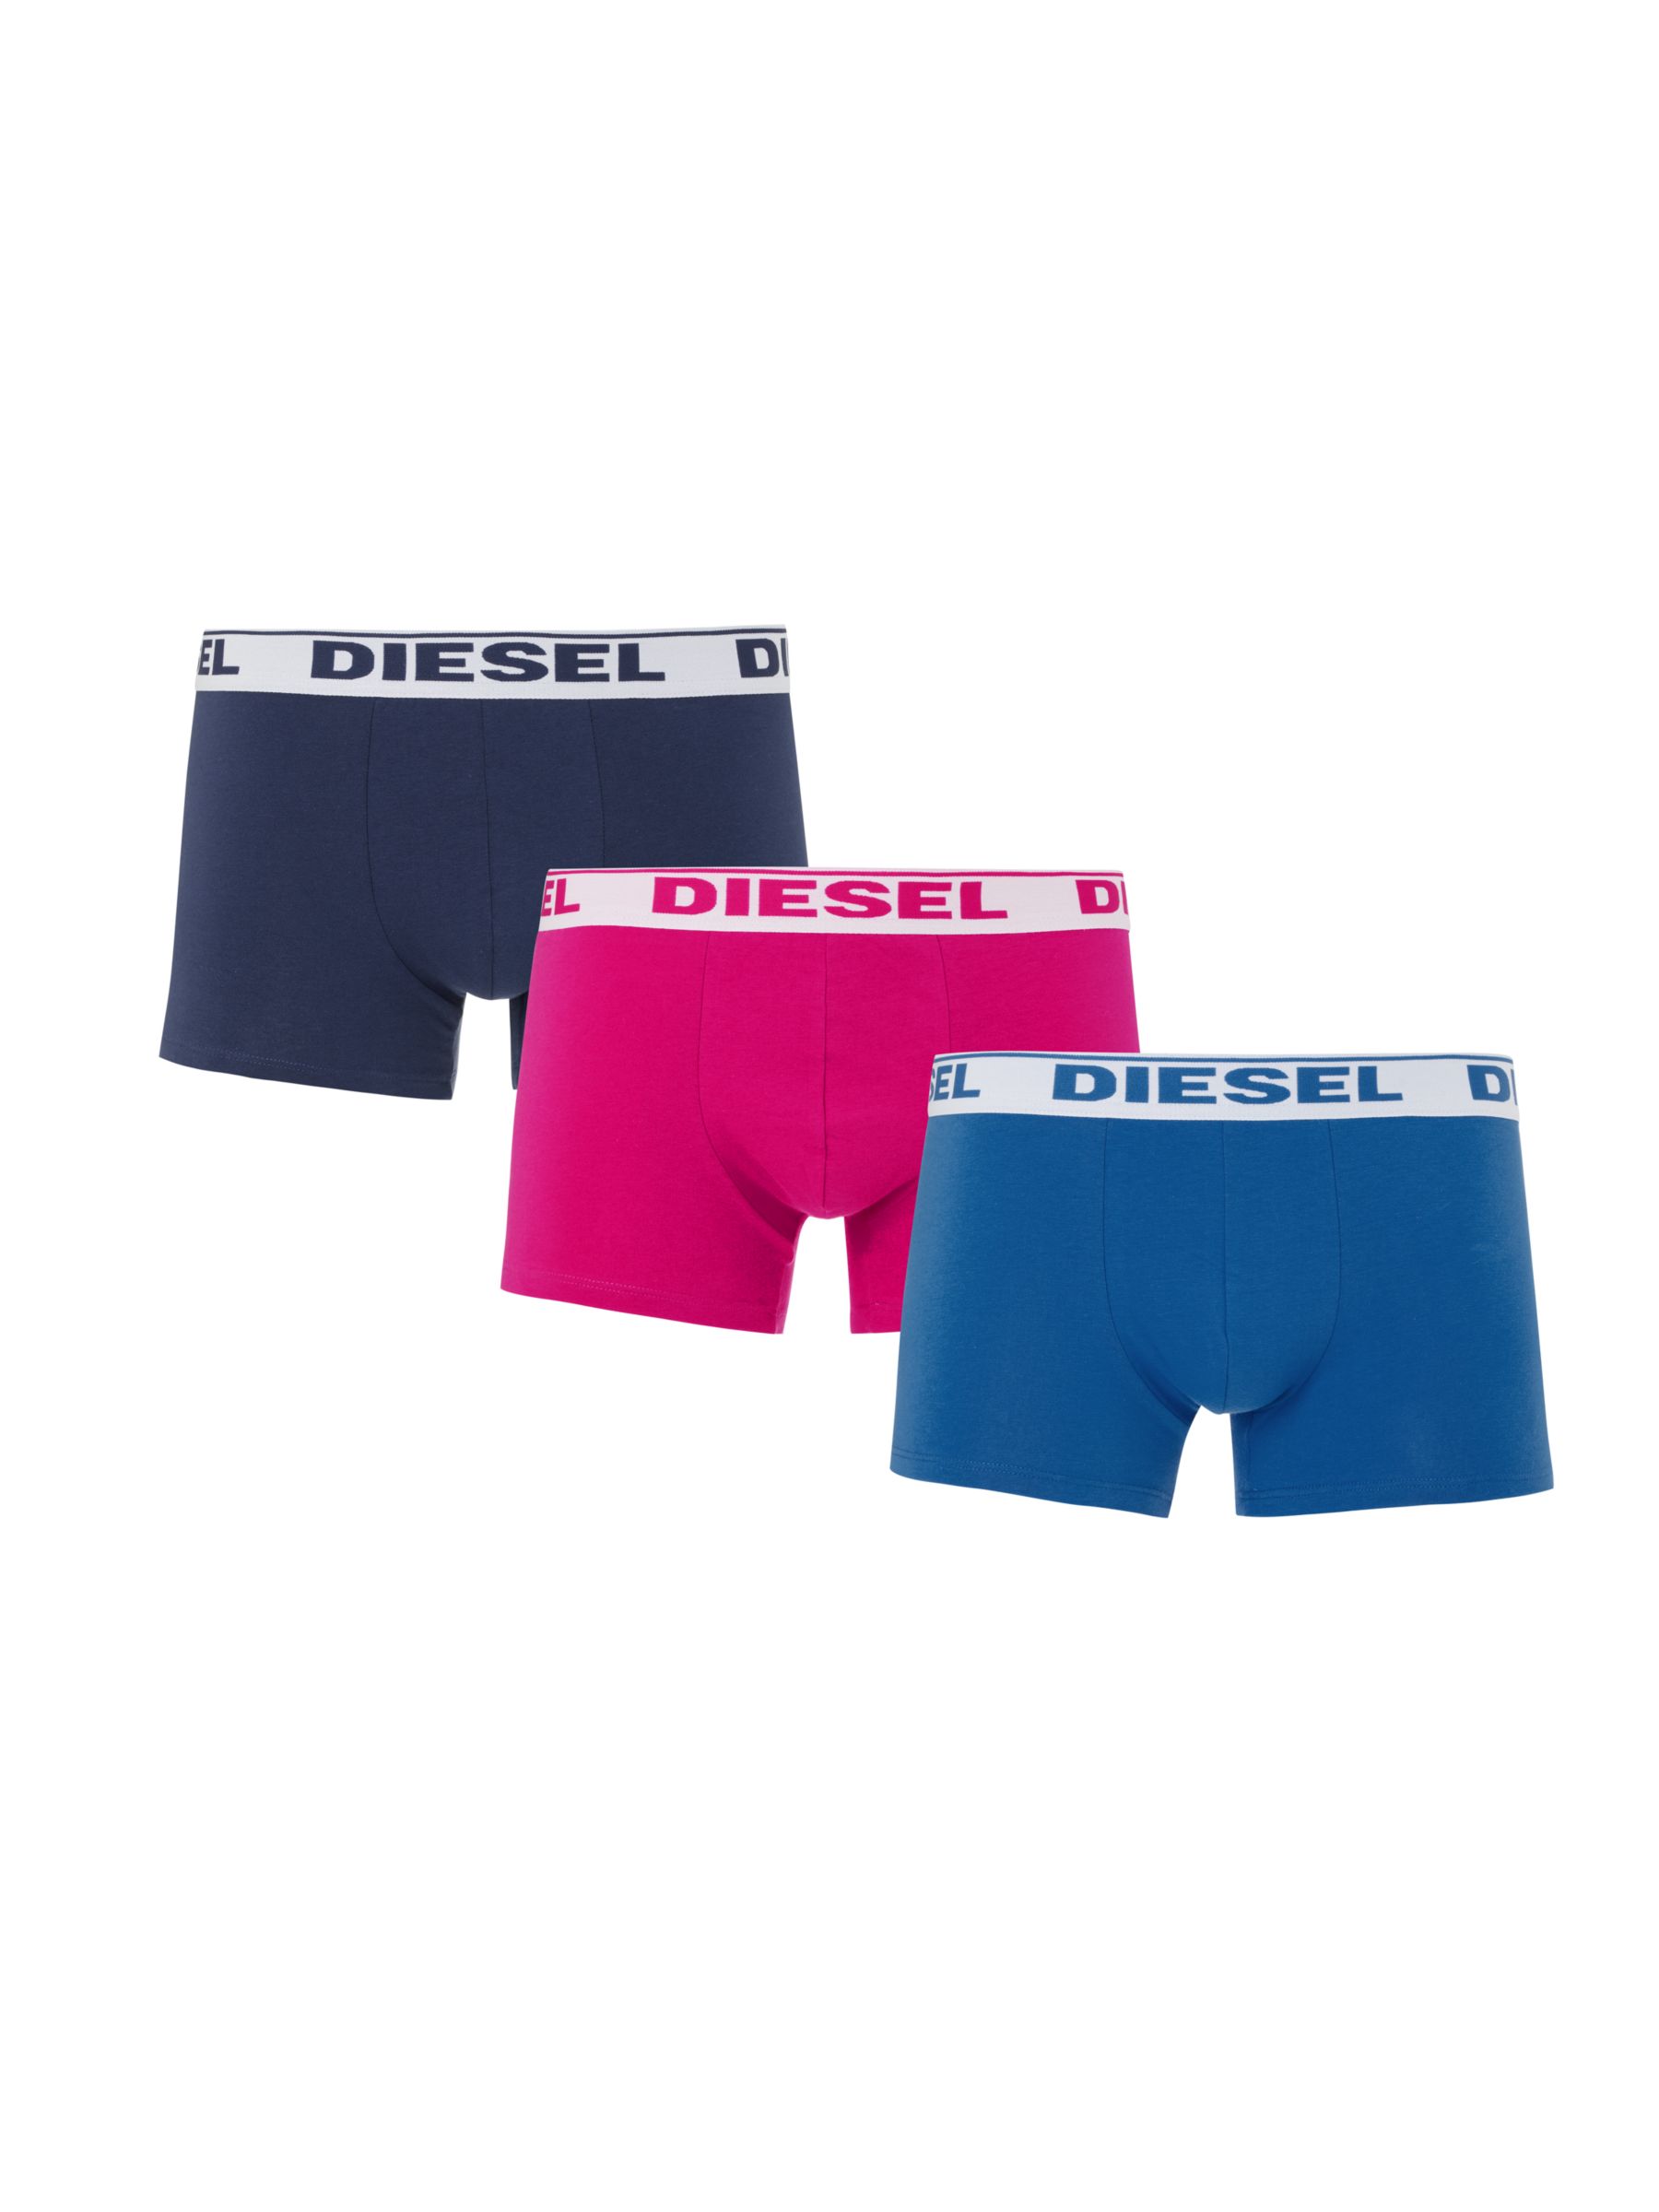 Diesel Shawn Boxer Trunks, Pack of 3, Navy/Blue/Orange, XL